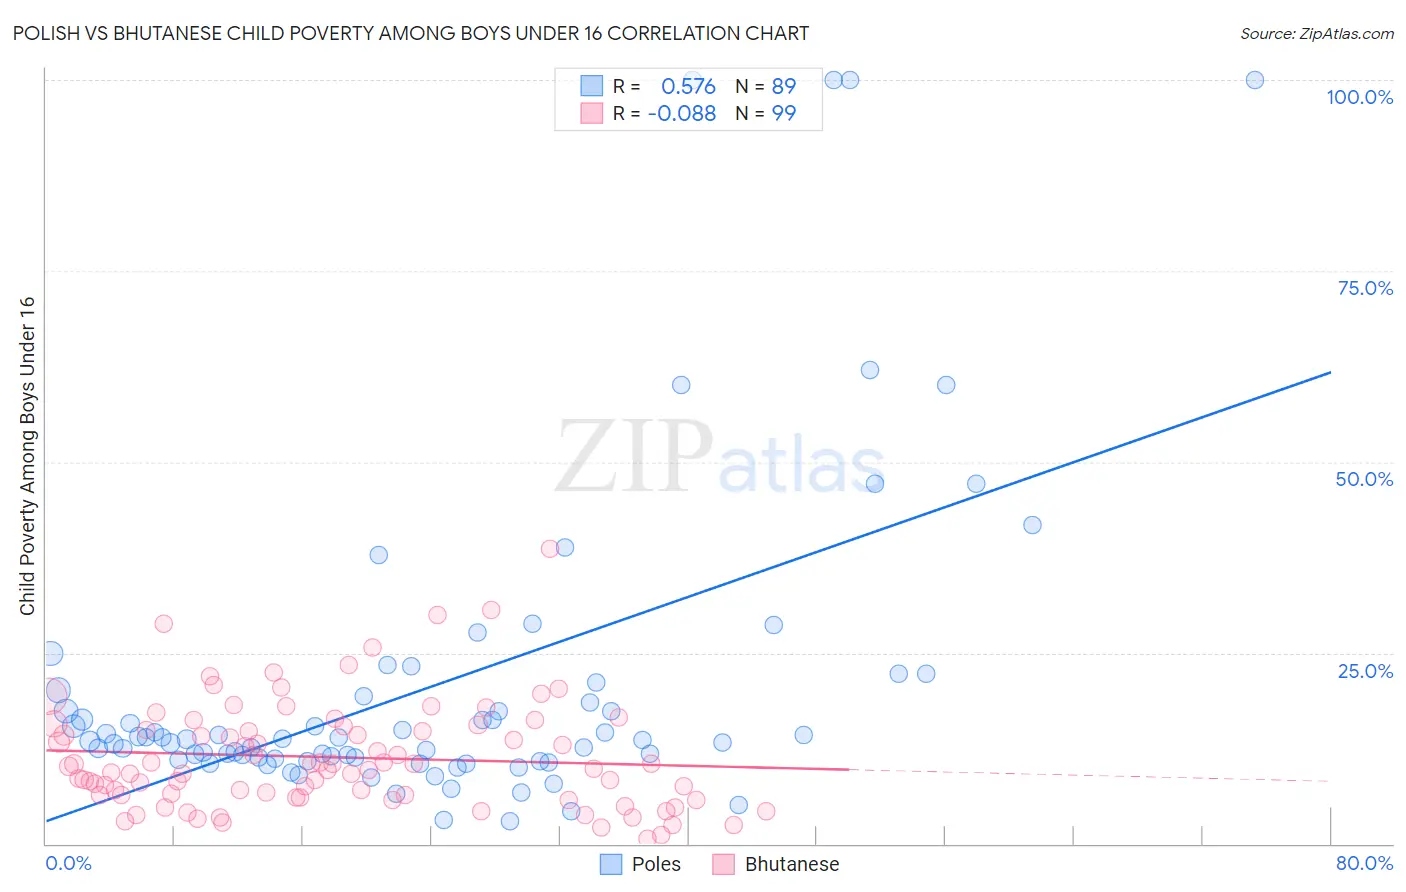 Polish vs Bhutanese Child Poverty Among Boys Under 16